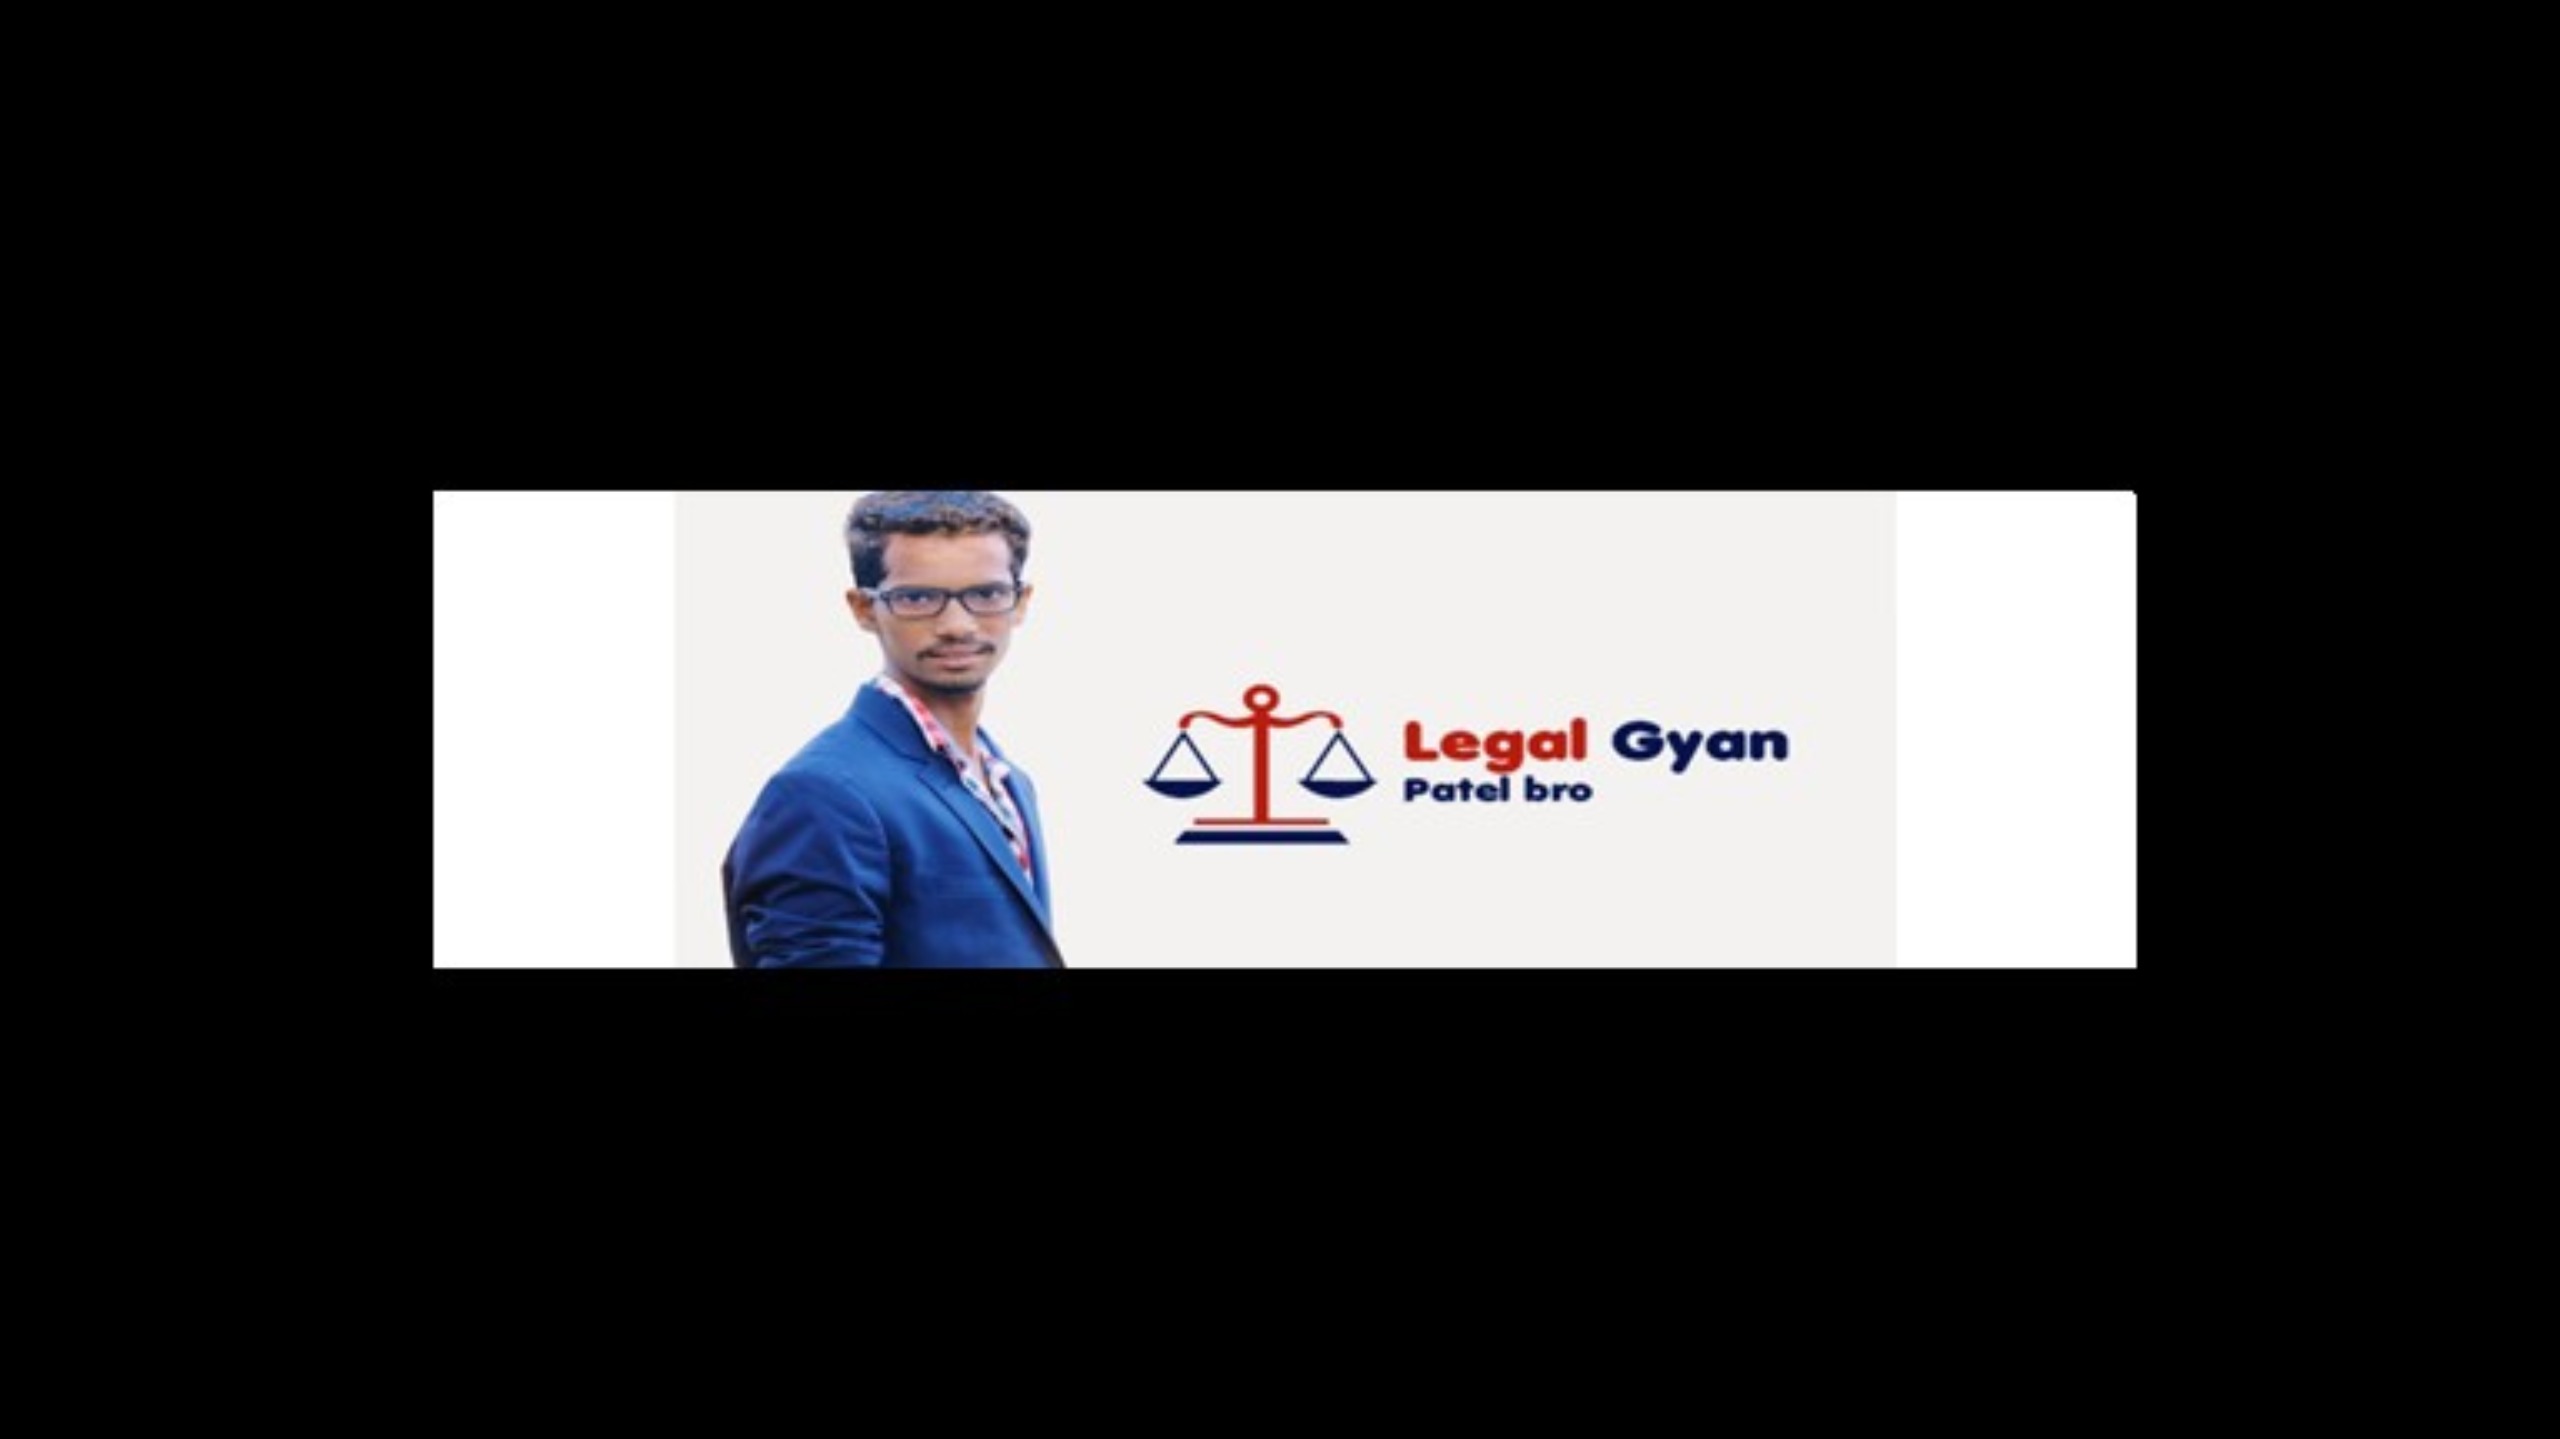 Legal Gyan